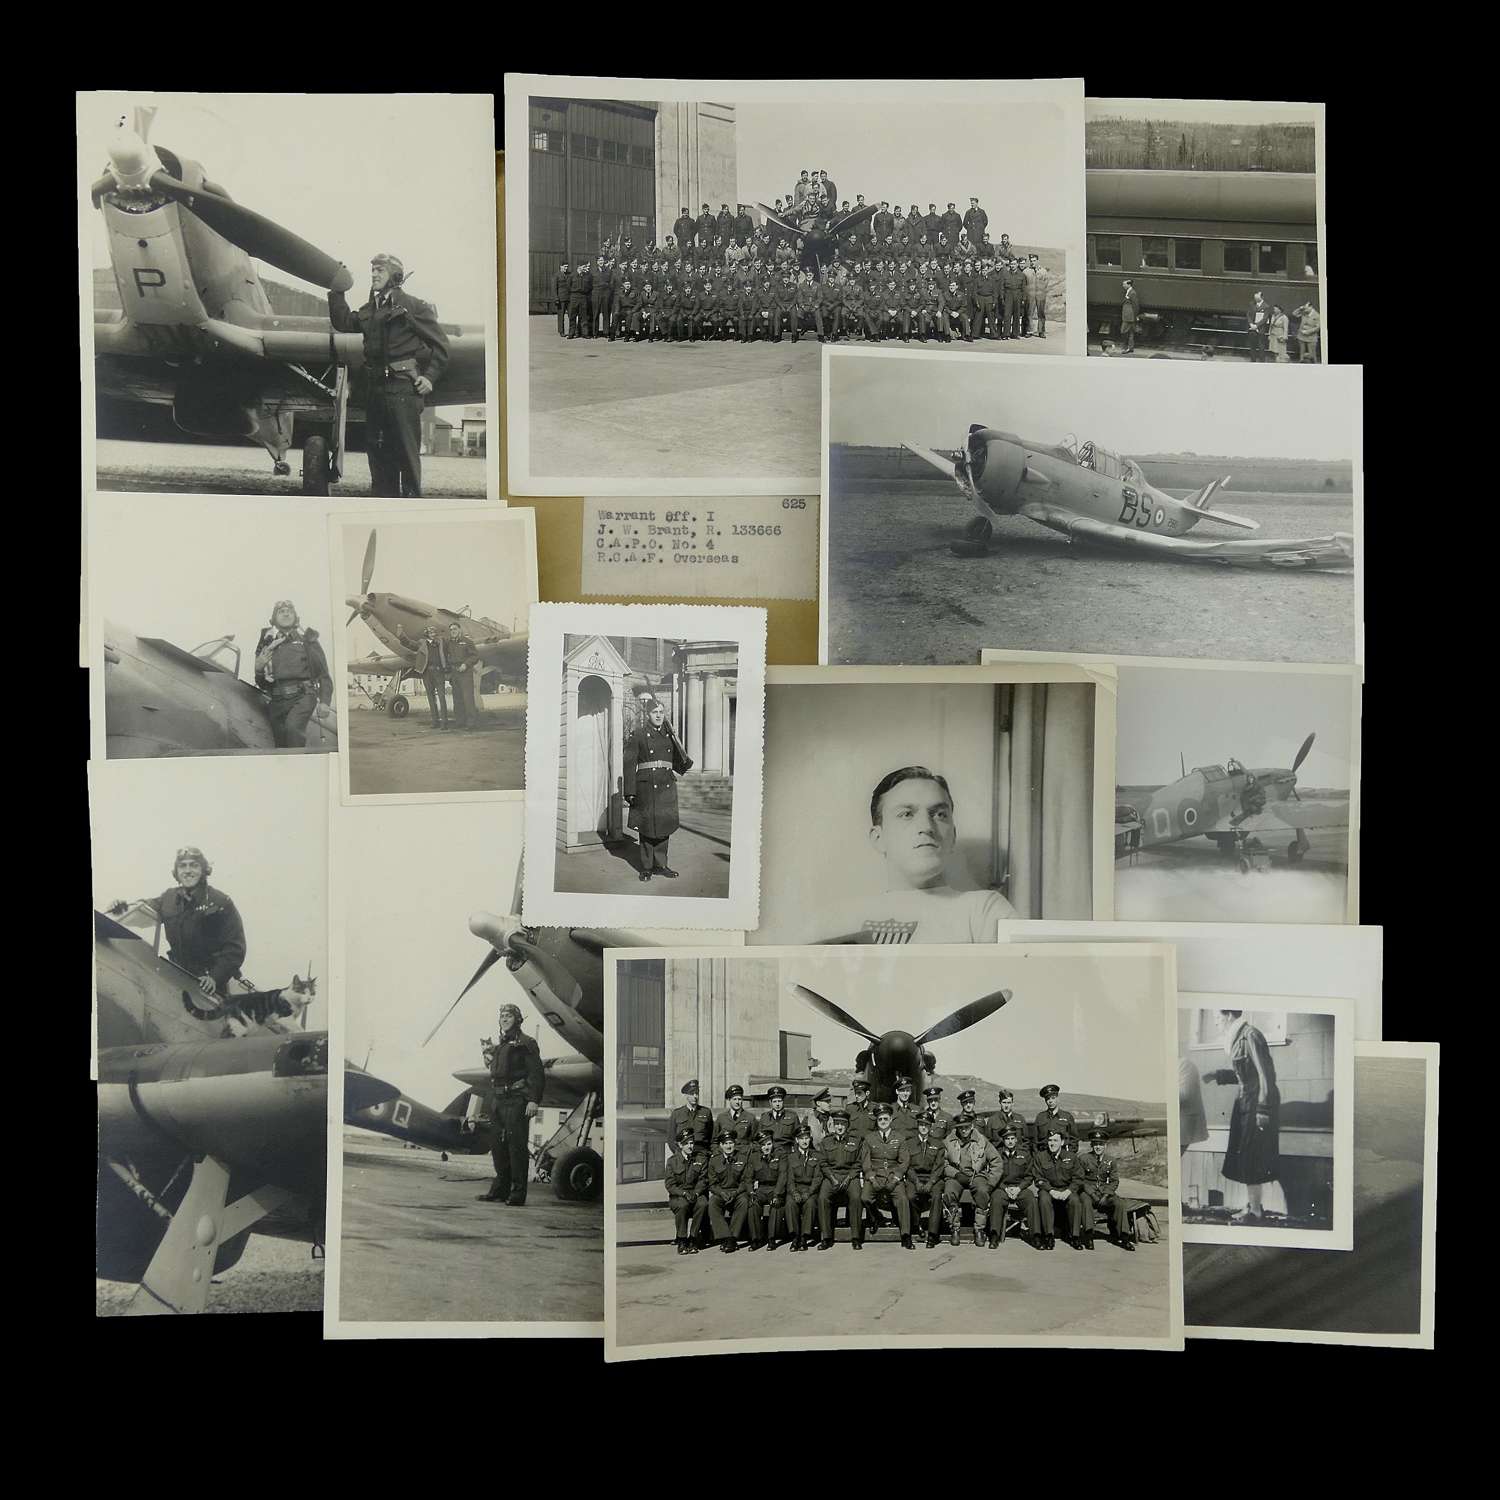 Photographs of a Hurricane pilot